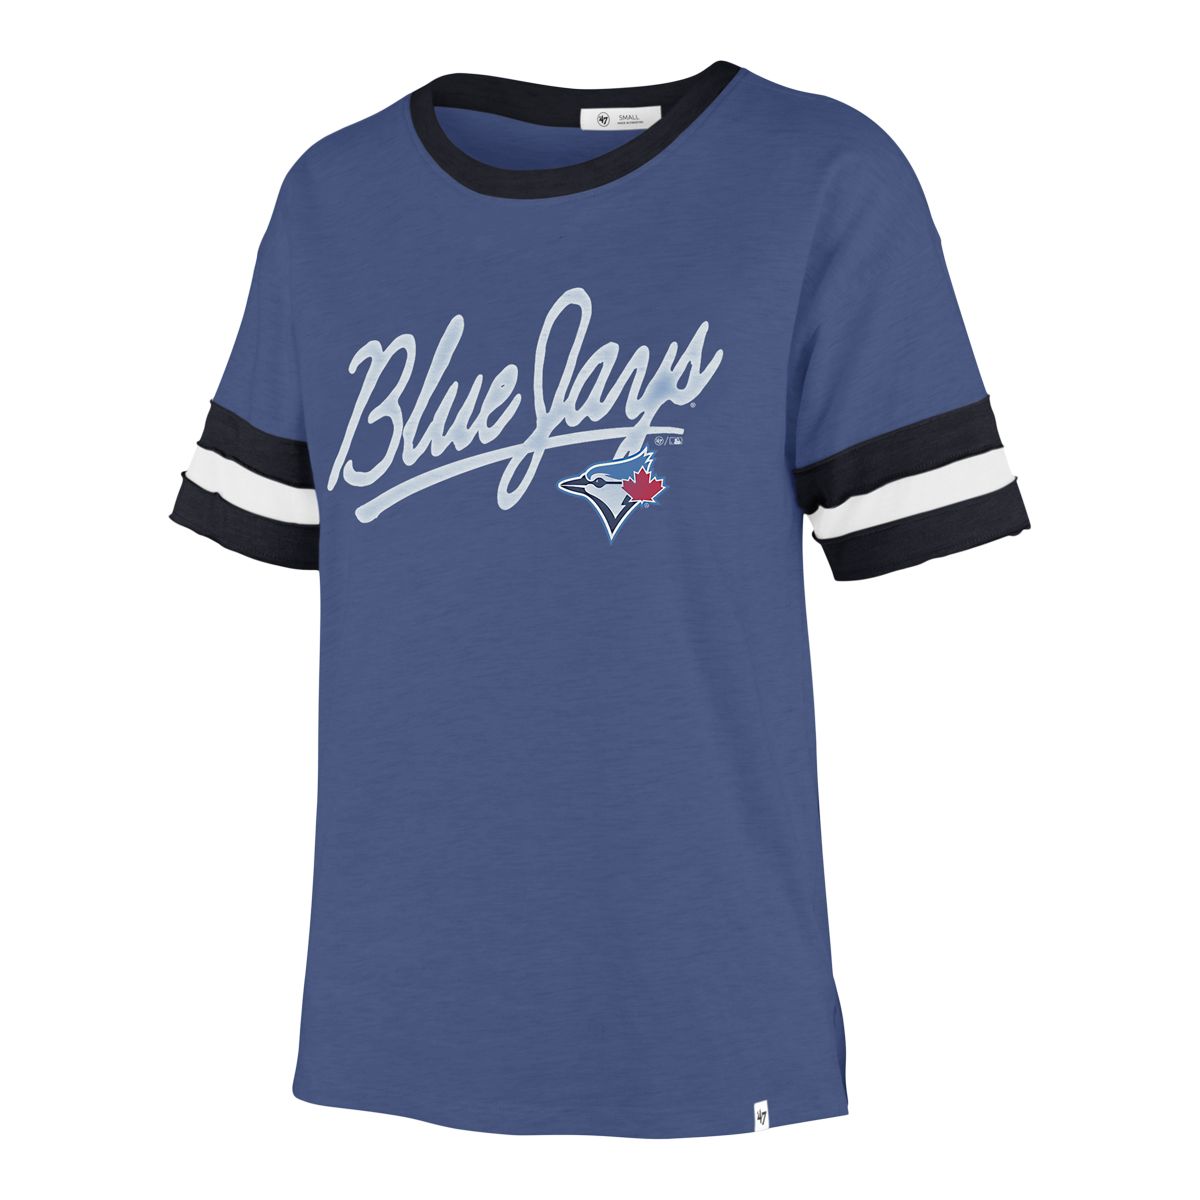  '47 Brand Women's Dani Short Sleeve Fashion Tee Shirt - MLB  Ladies Crew Neck T-Shirt : Sports & Outdoors